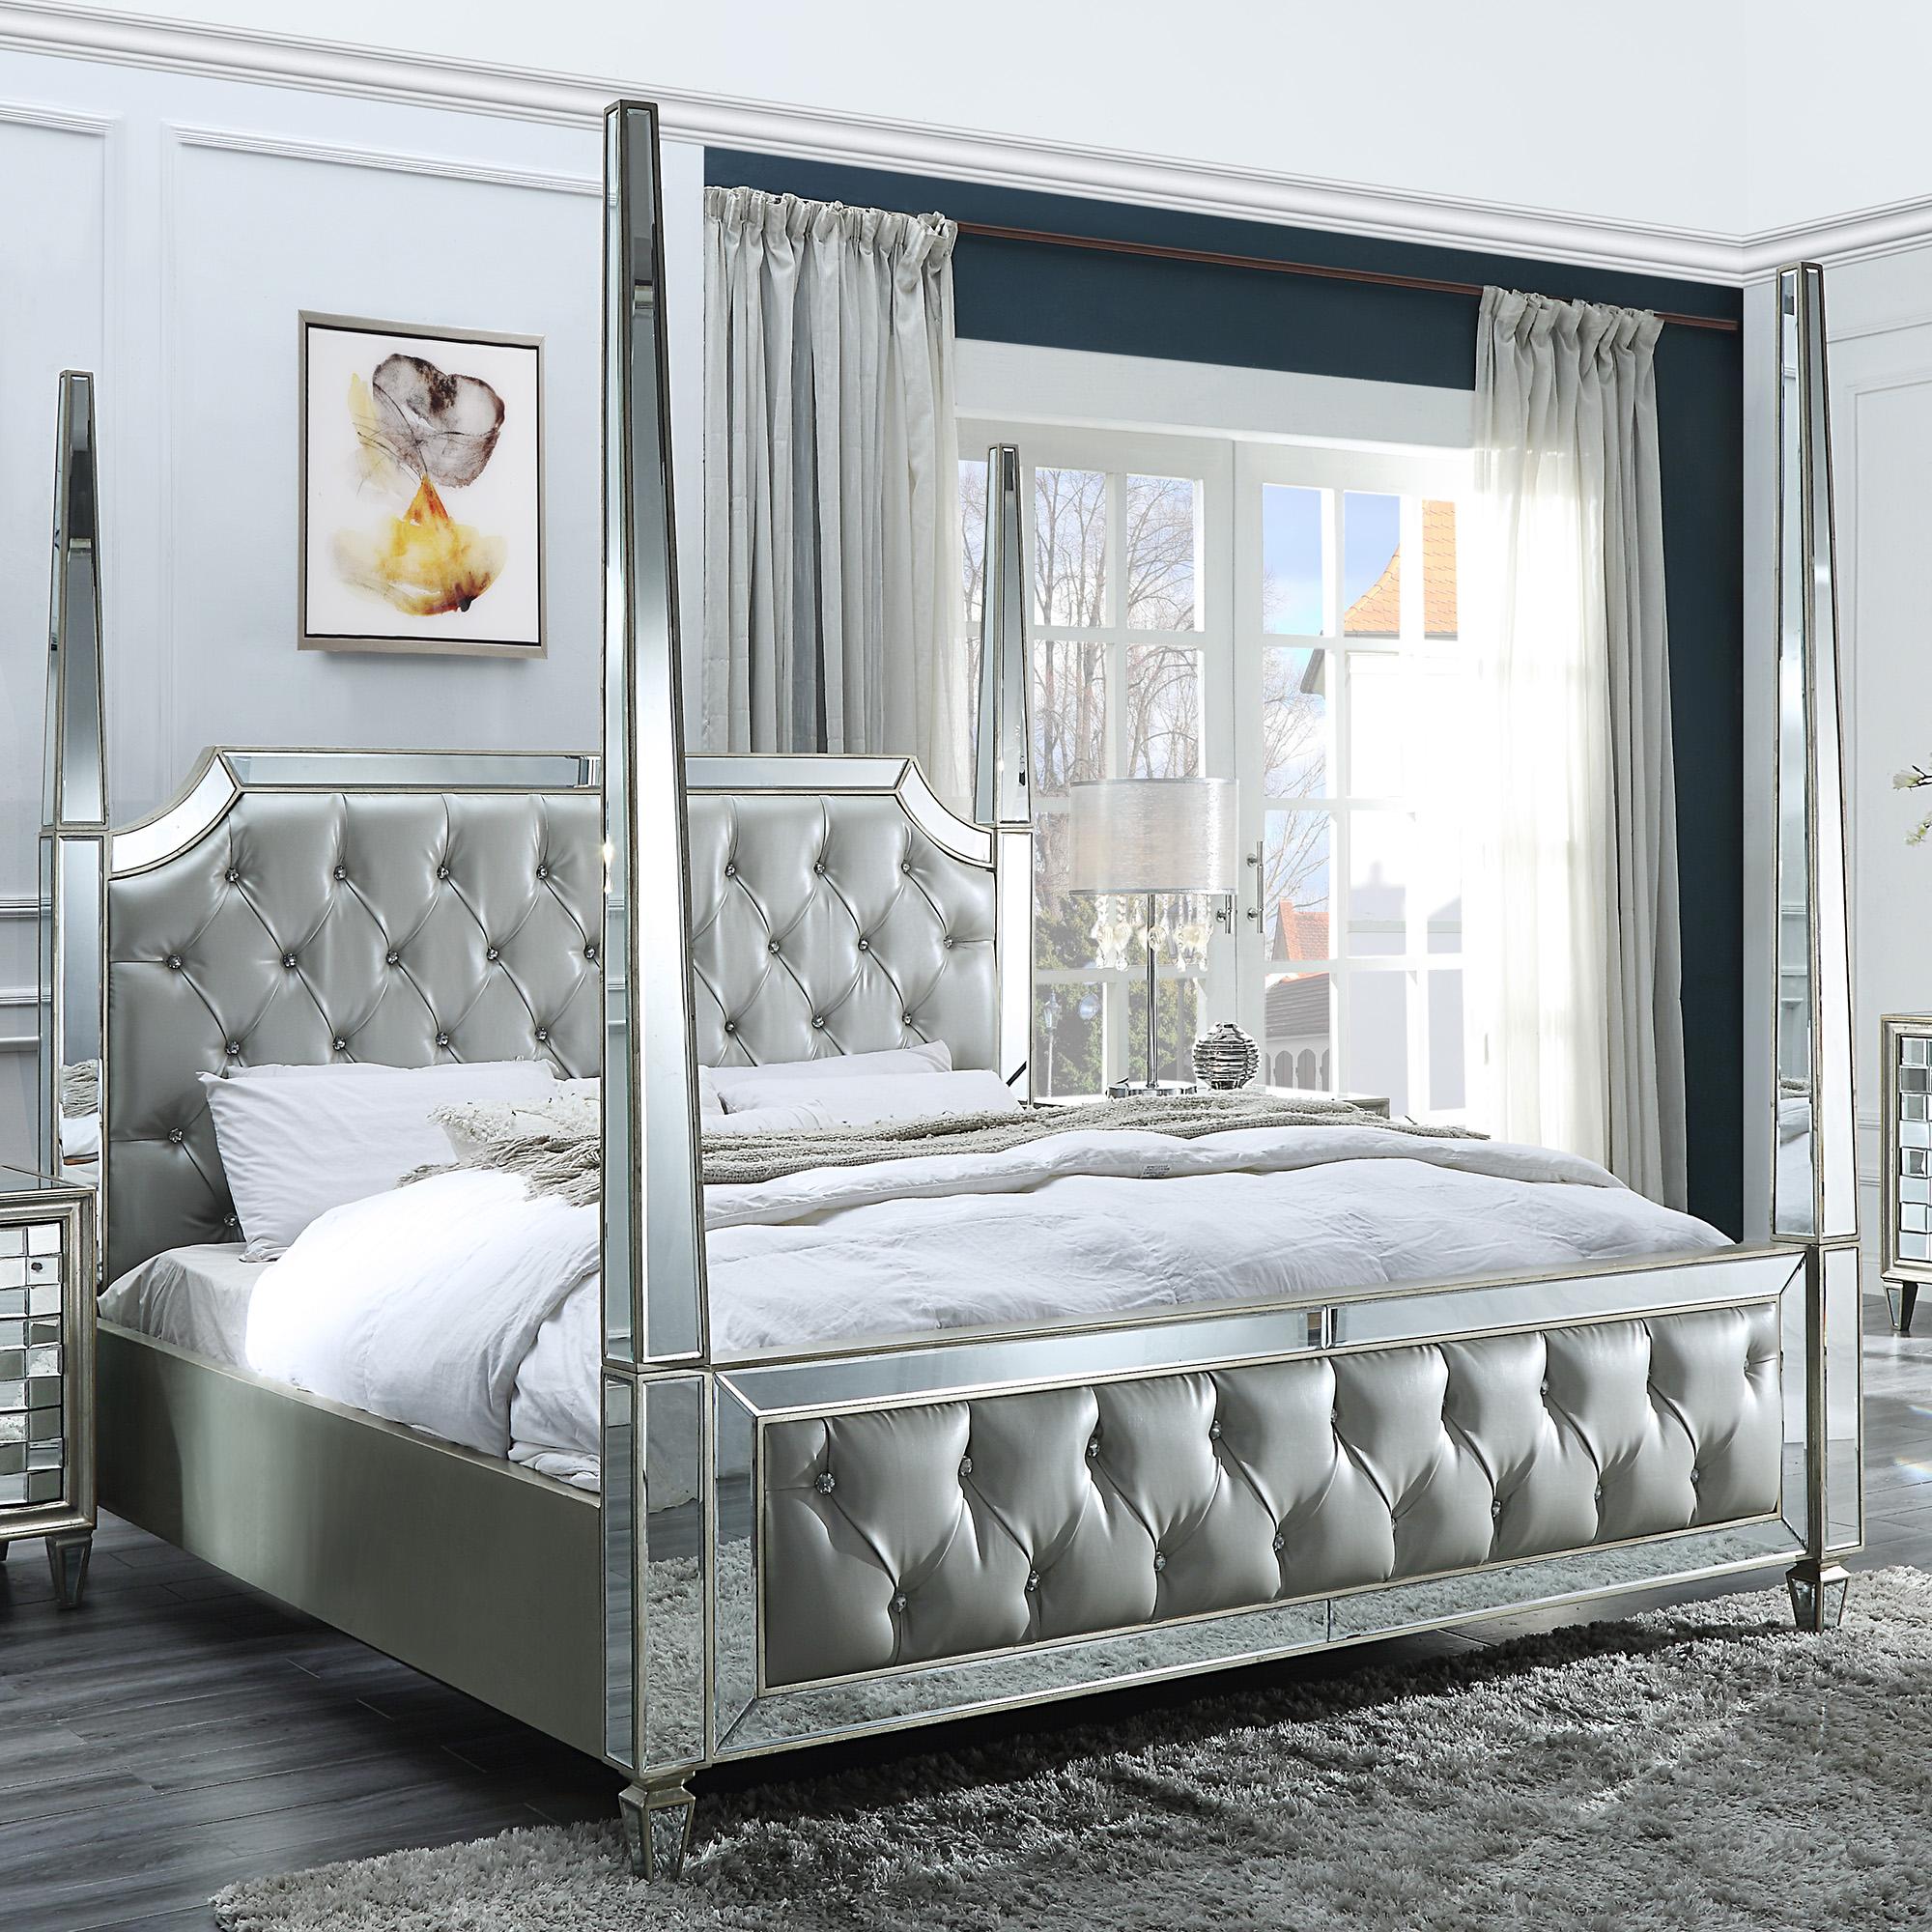 Modern Canopy Bed HD-6001 HD-EK6001 in Mirrored, Silver Faux Leather